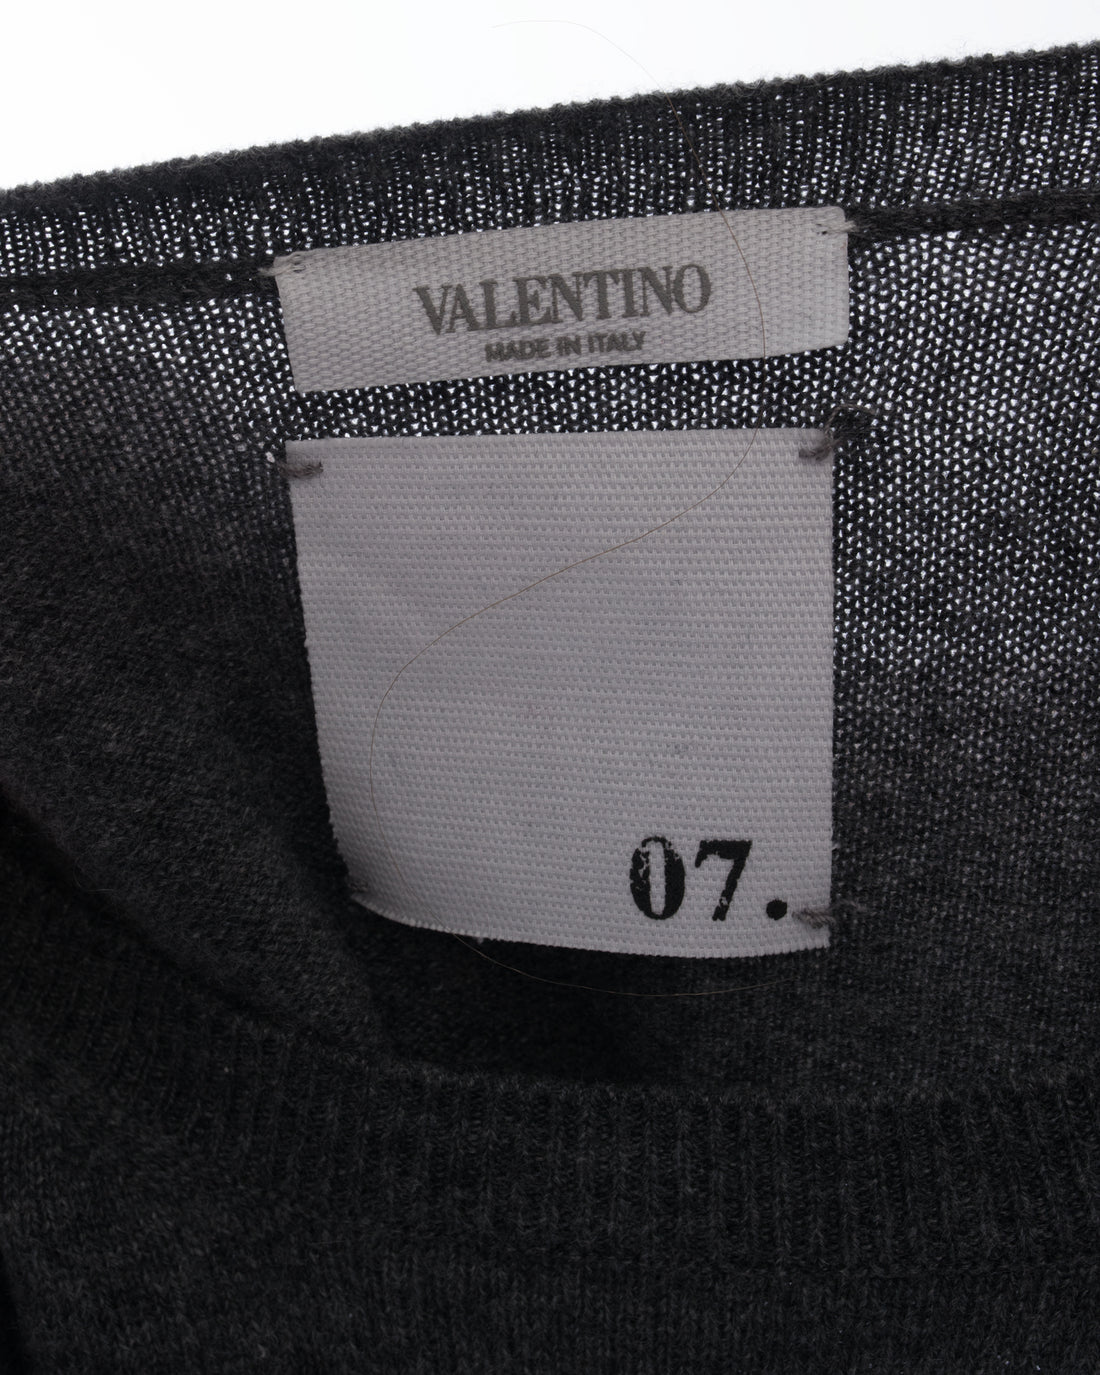 Valentino Rockstud Untitled Grey Cashmere Pullover Sweater - M